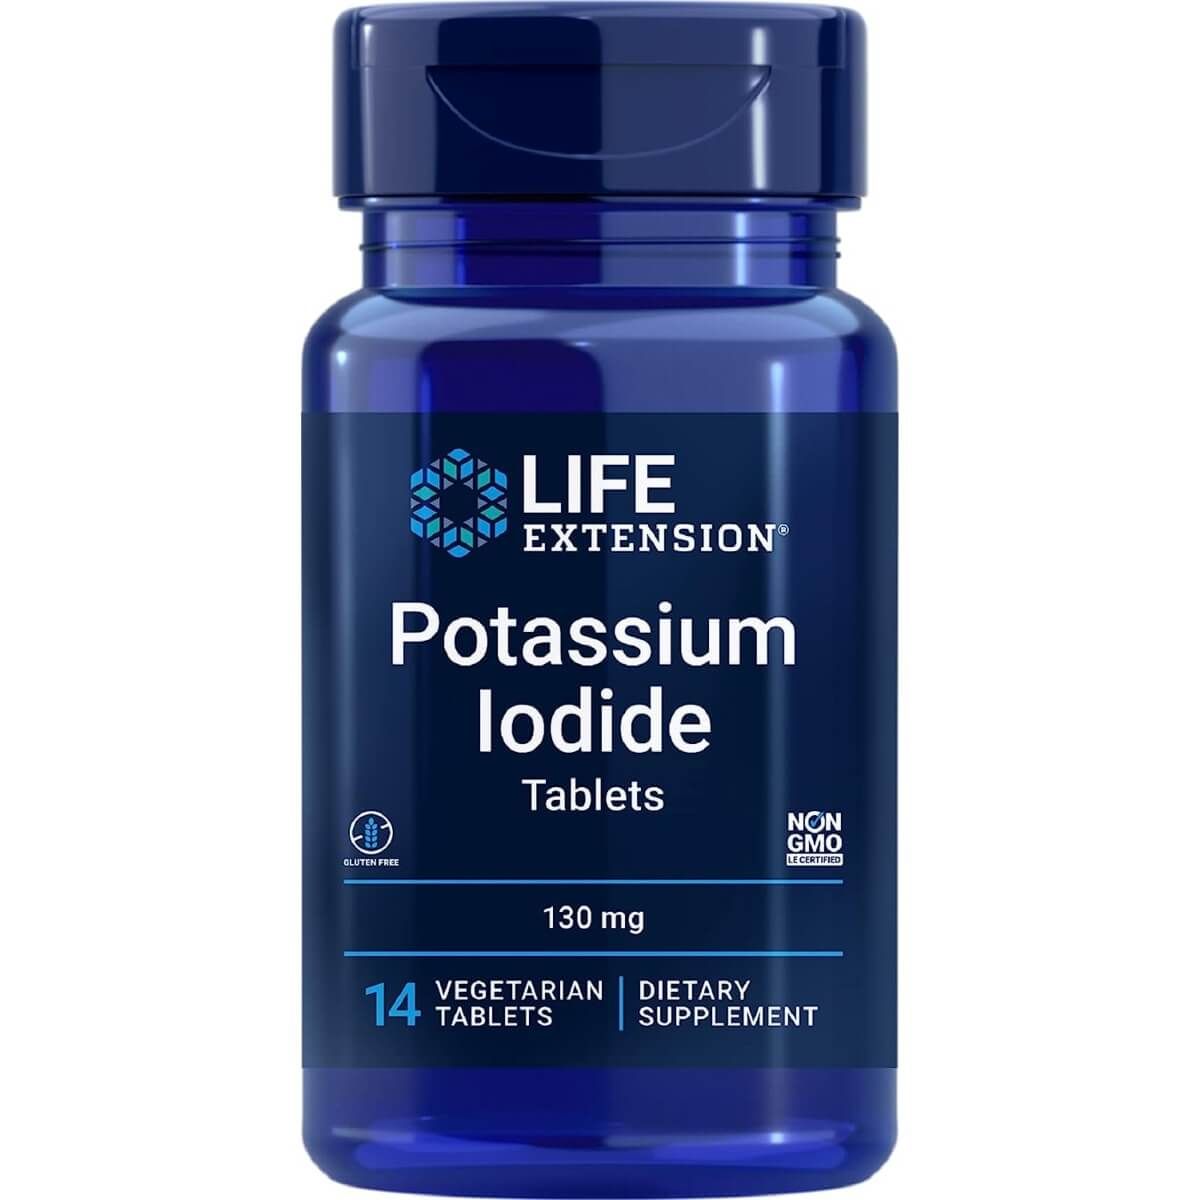 Life Extension Potassium Iodide Tablets 130 mg 14 Vegetarian Tablets | Premium Supplements at MYSUPPLEMENTSHOP